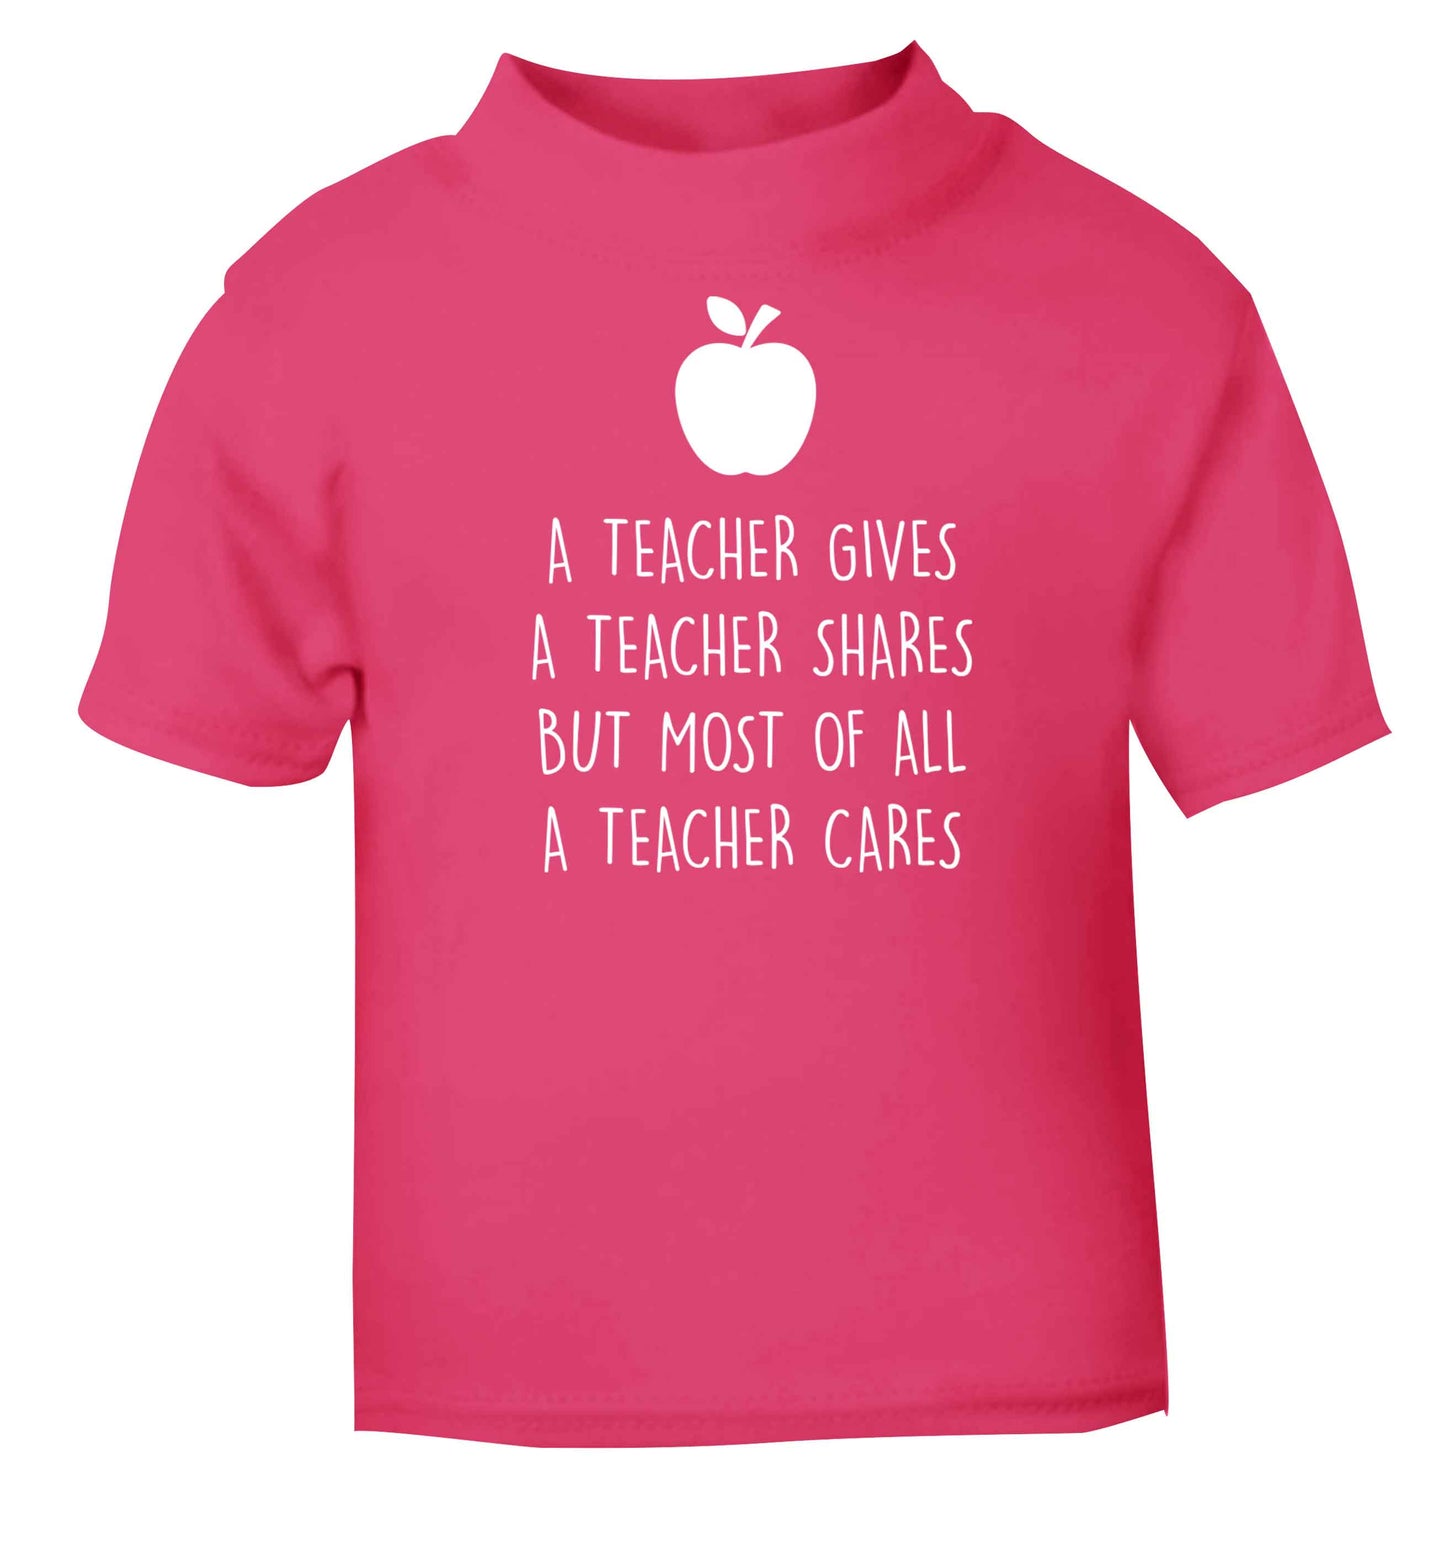 A teacher gives a teacher shares but most of all a teacher cares pink baby toddler Tshirt 2 Years